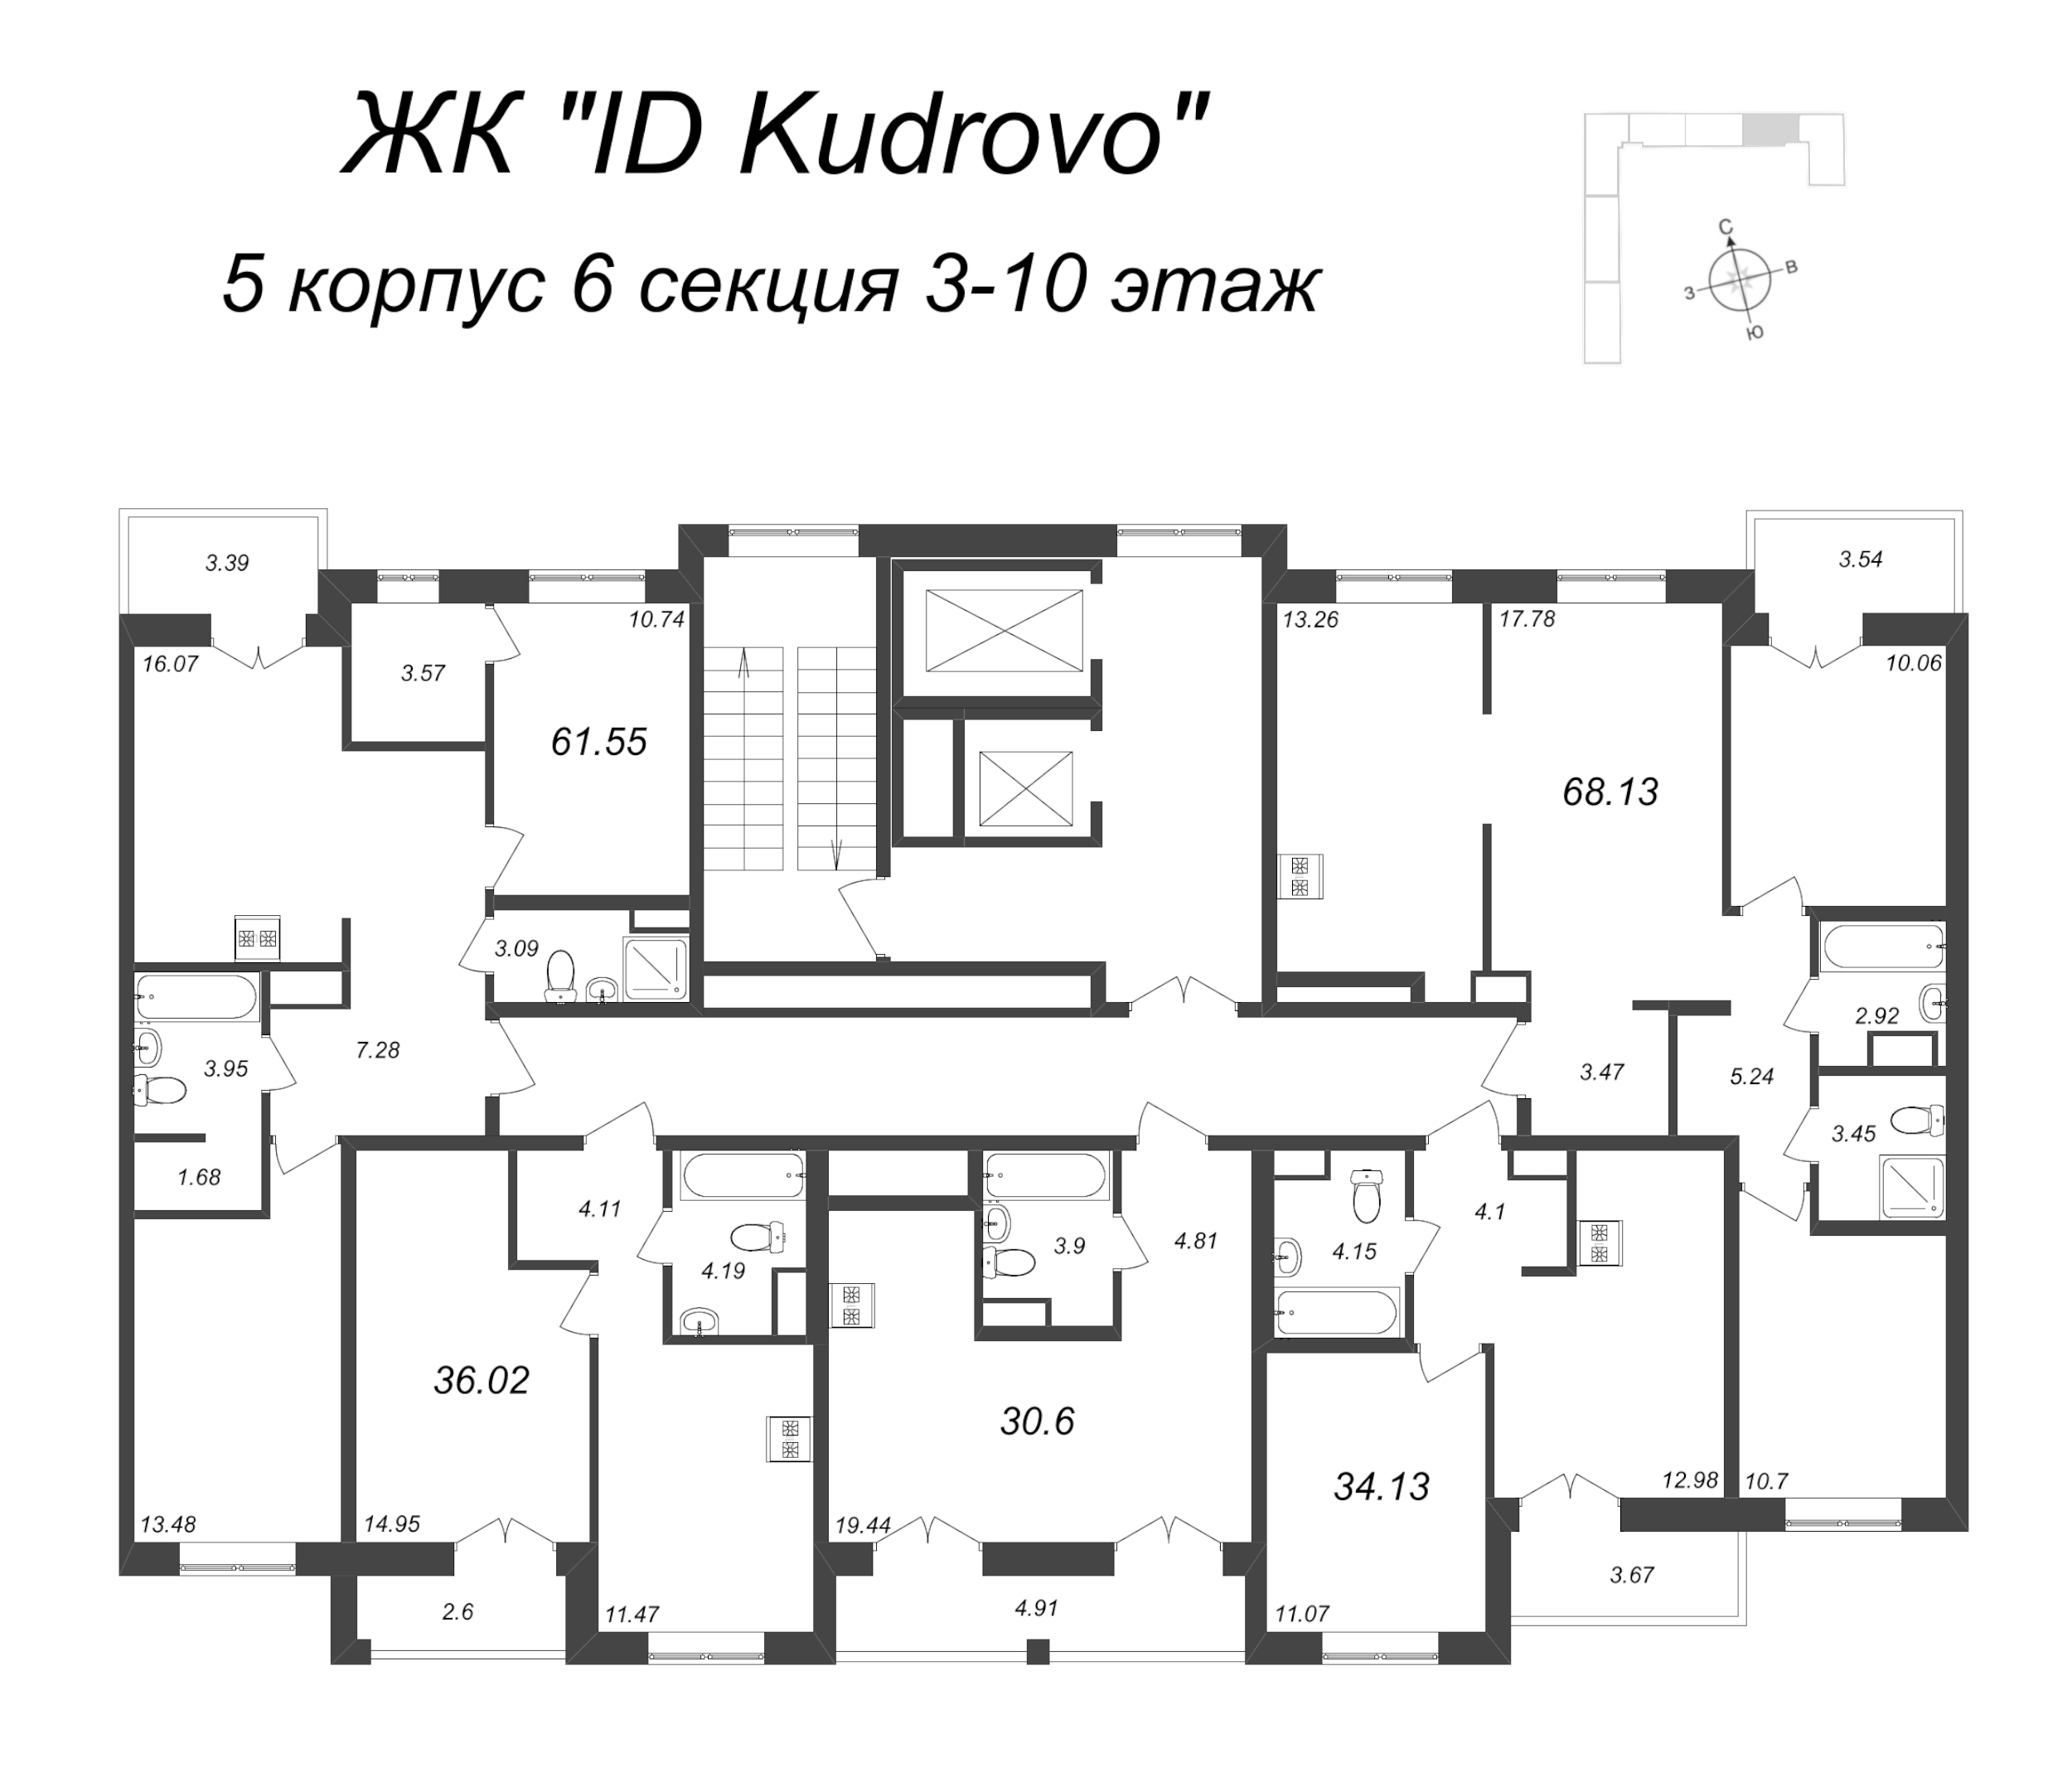 3-комнатная (Евро) квартира, 61.55 м² - планировка этажа